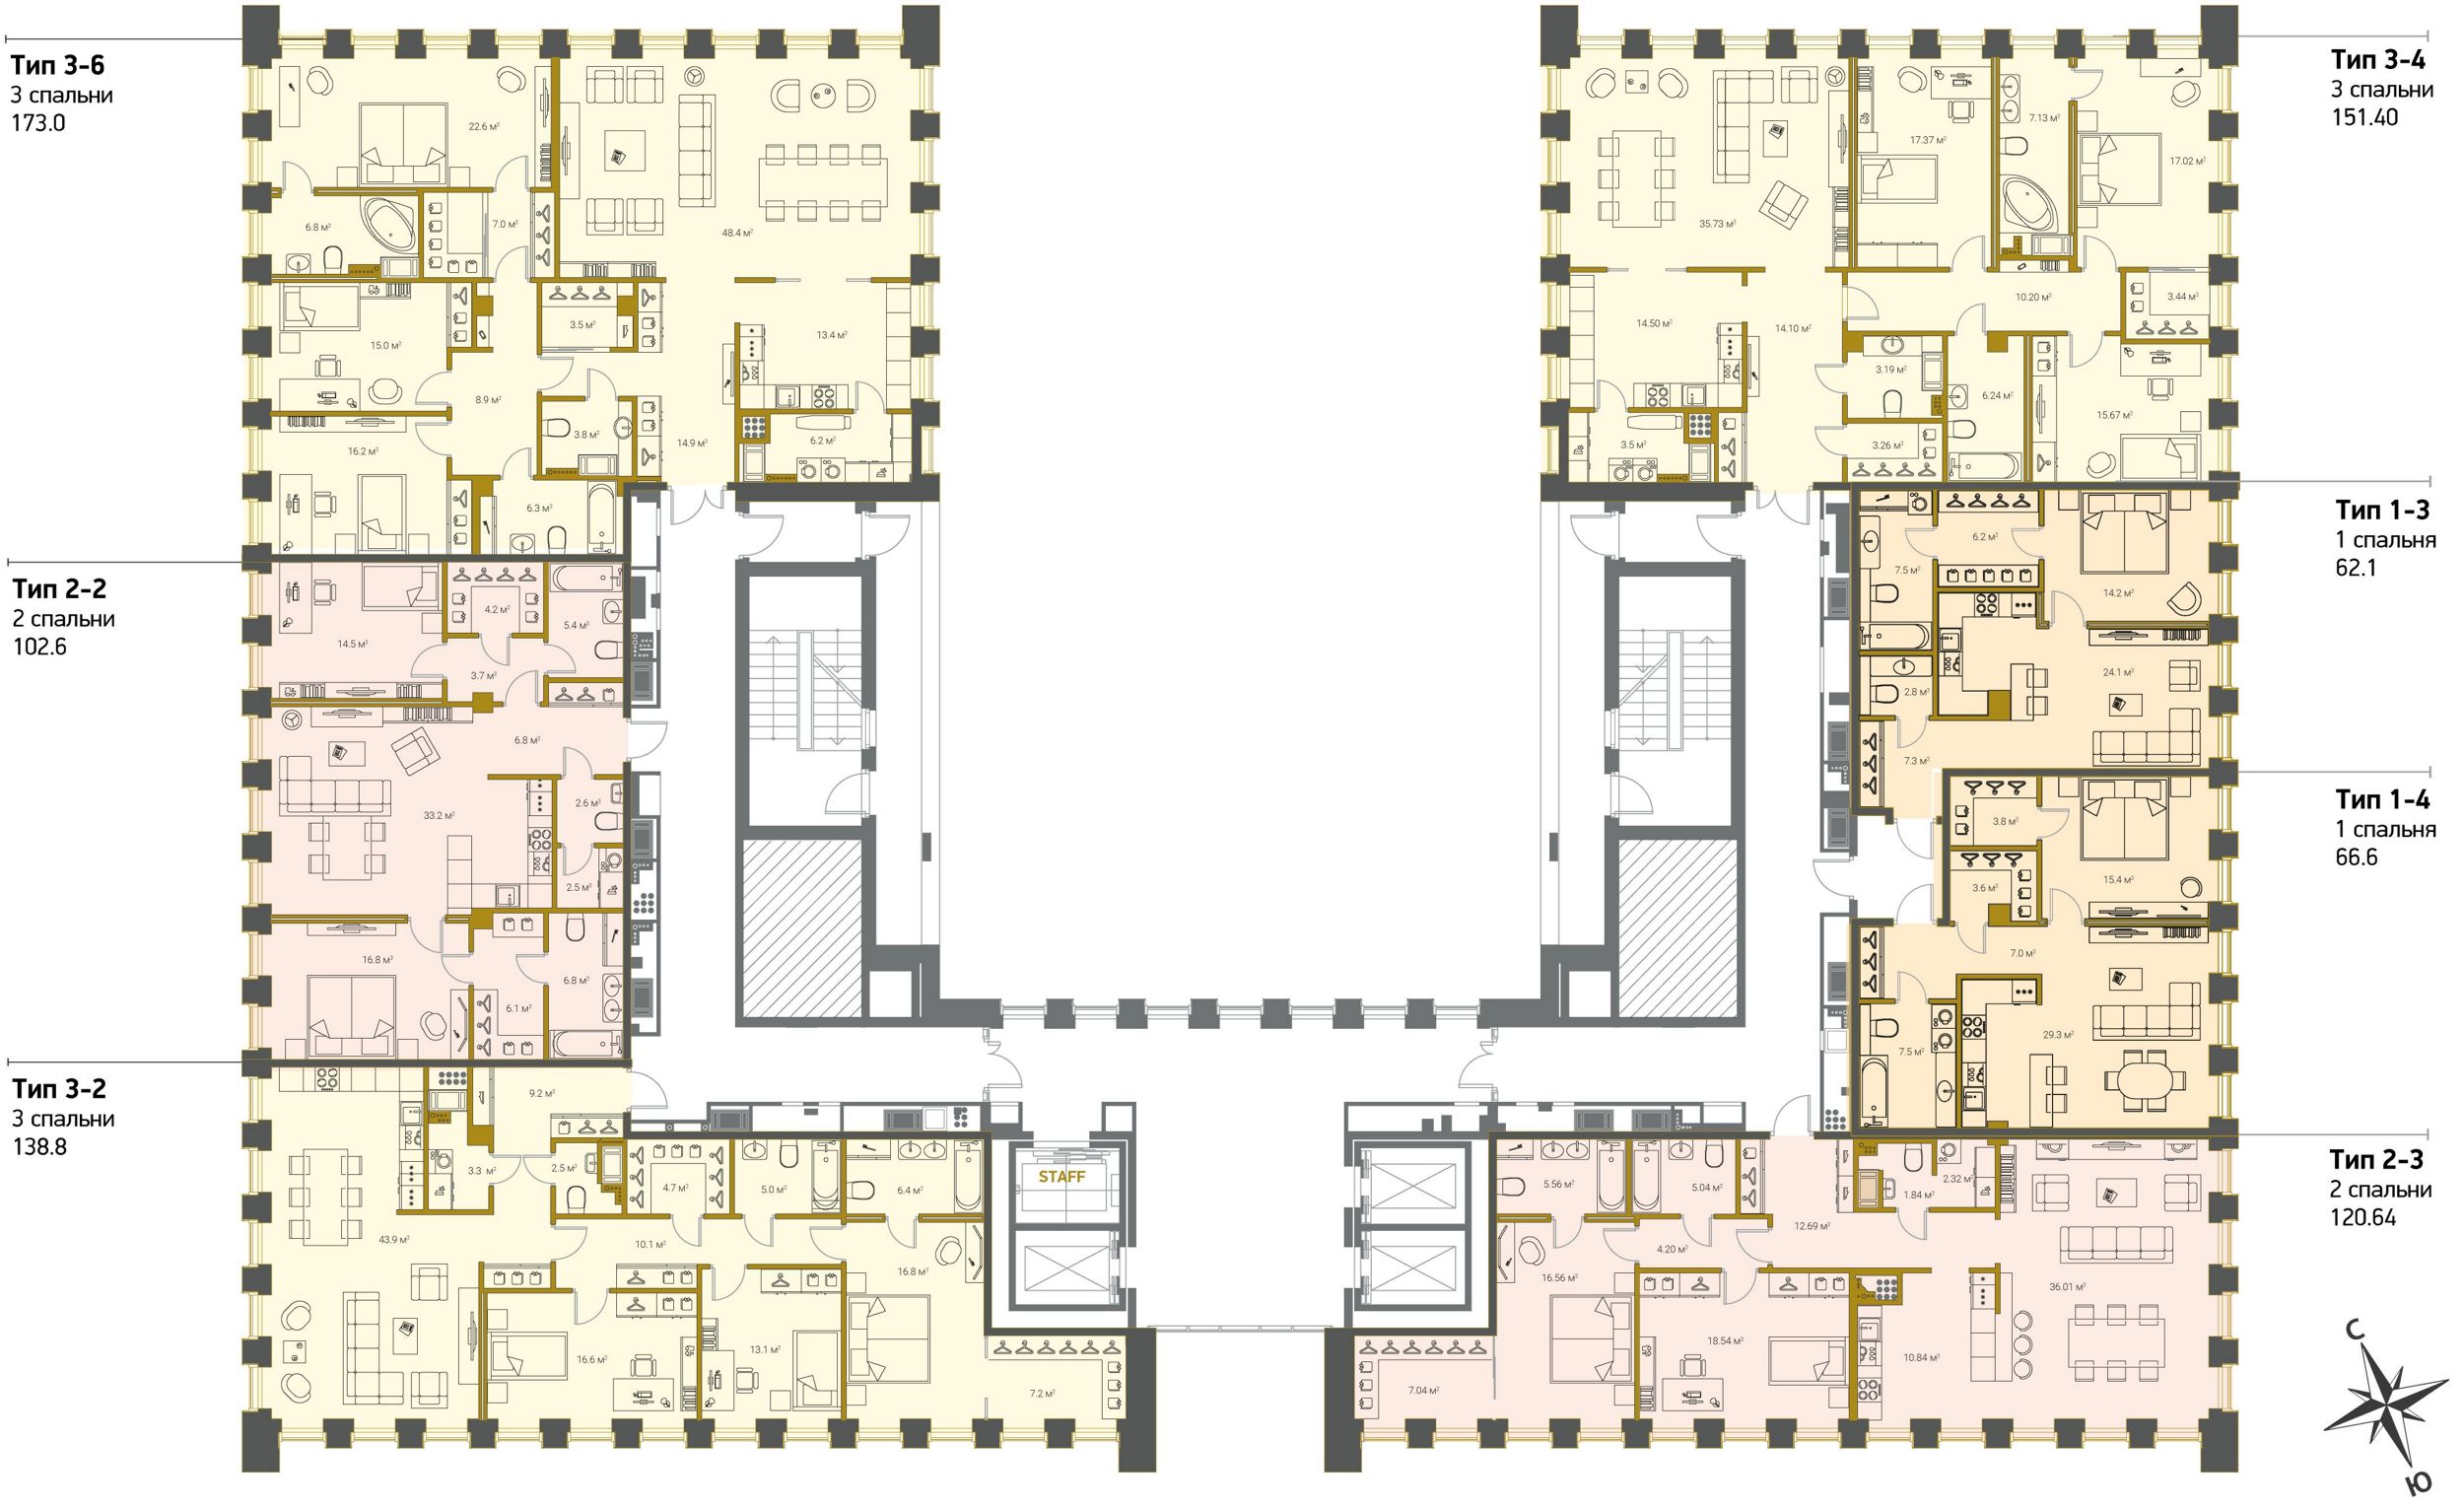 2-комнатная (Евро) квартира, 61.9 м² - планировка этажа